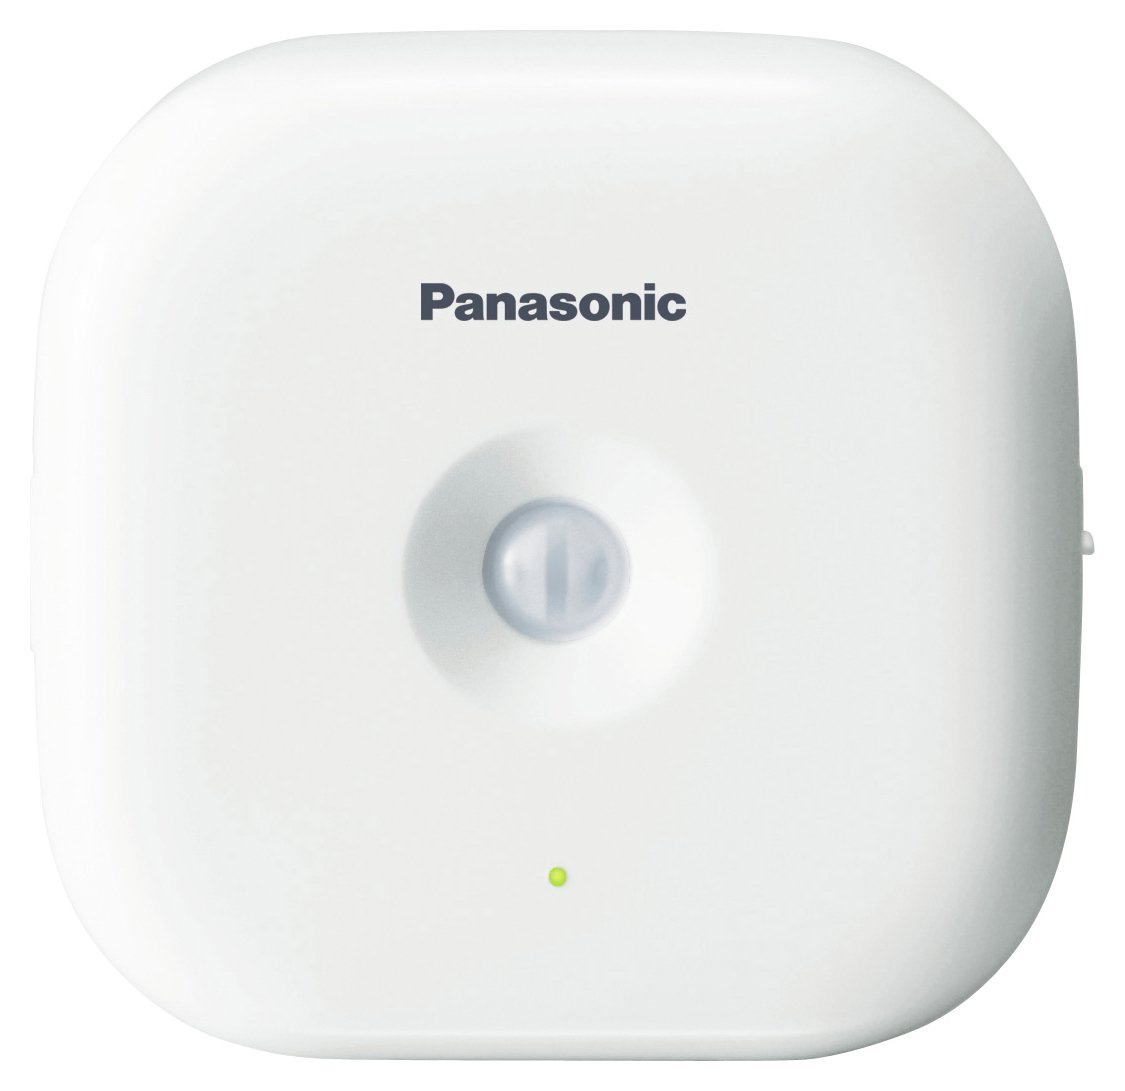 Panasonic Smart Home Motion Sensor.